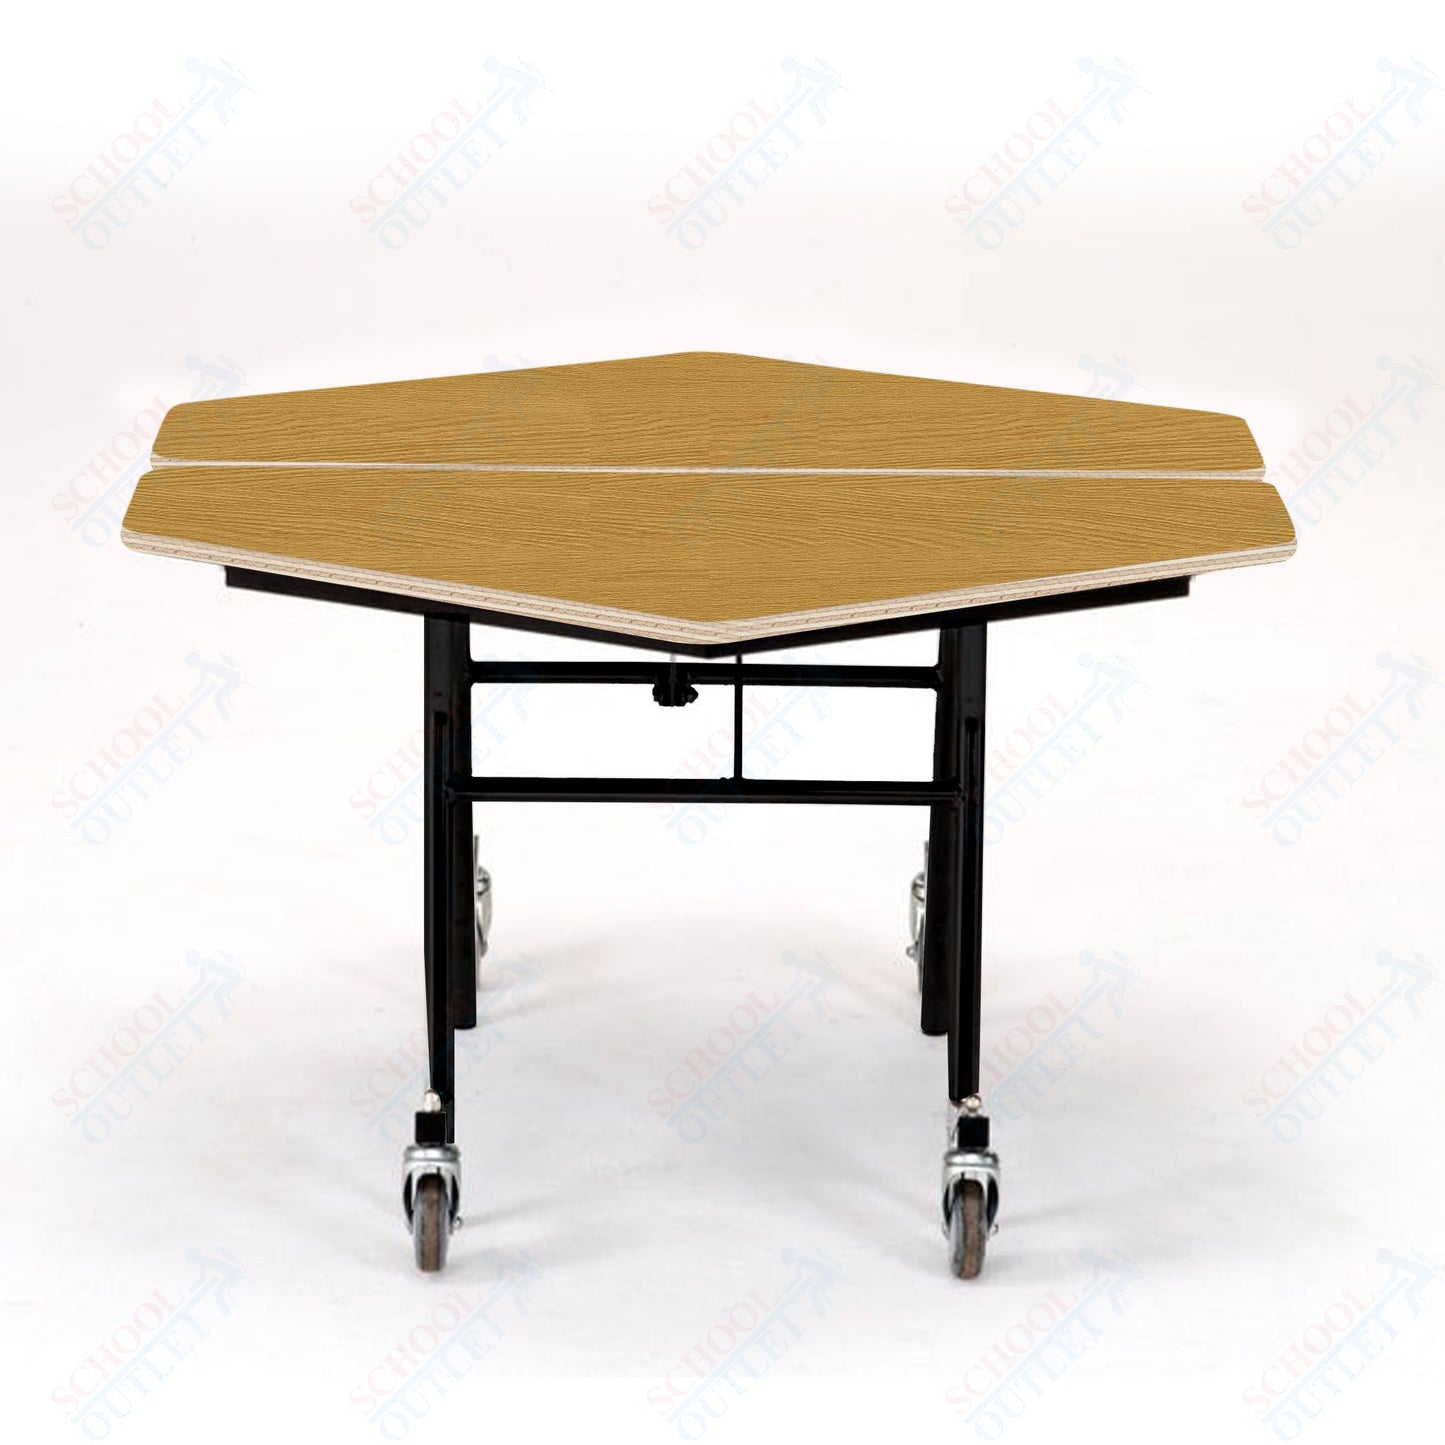 NPS Mobile Cafeteria Hexagon Table Shape Unit - 48" W x 48" L (National Public Seating NPS-MT48H)